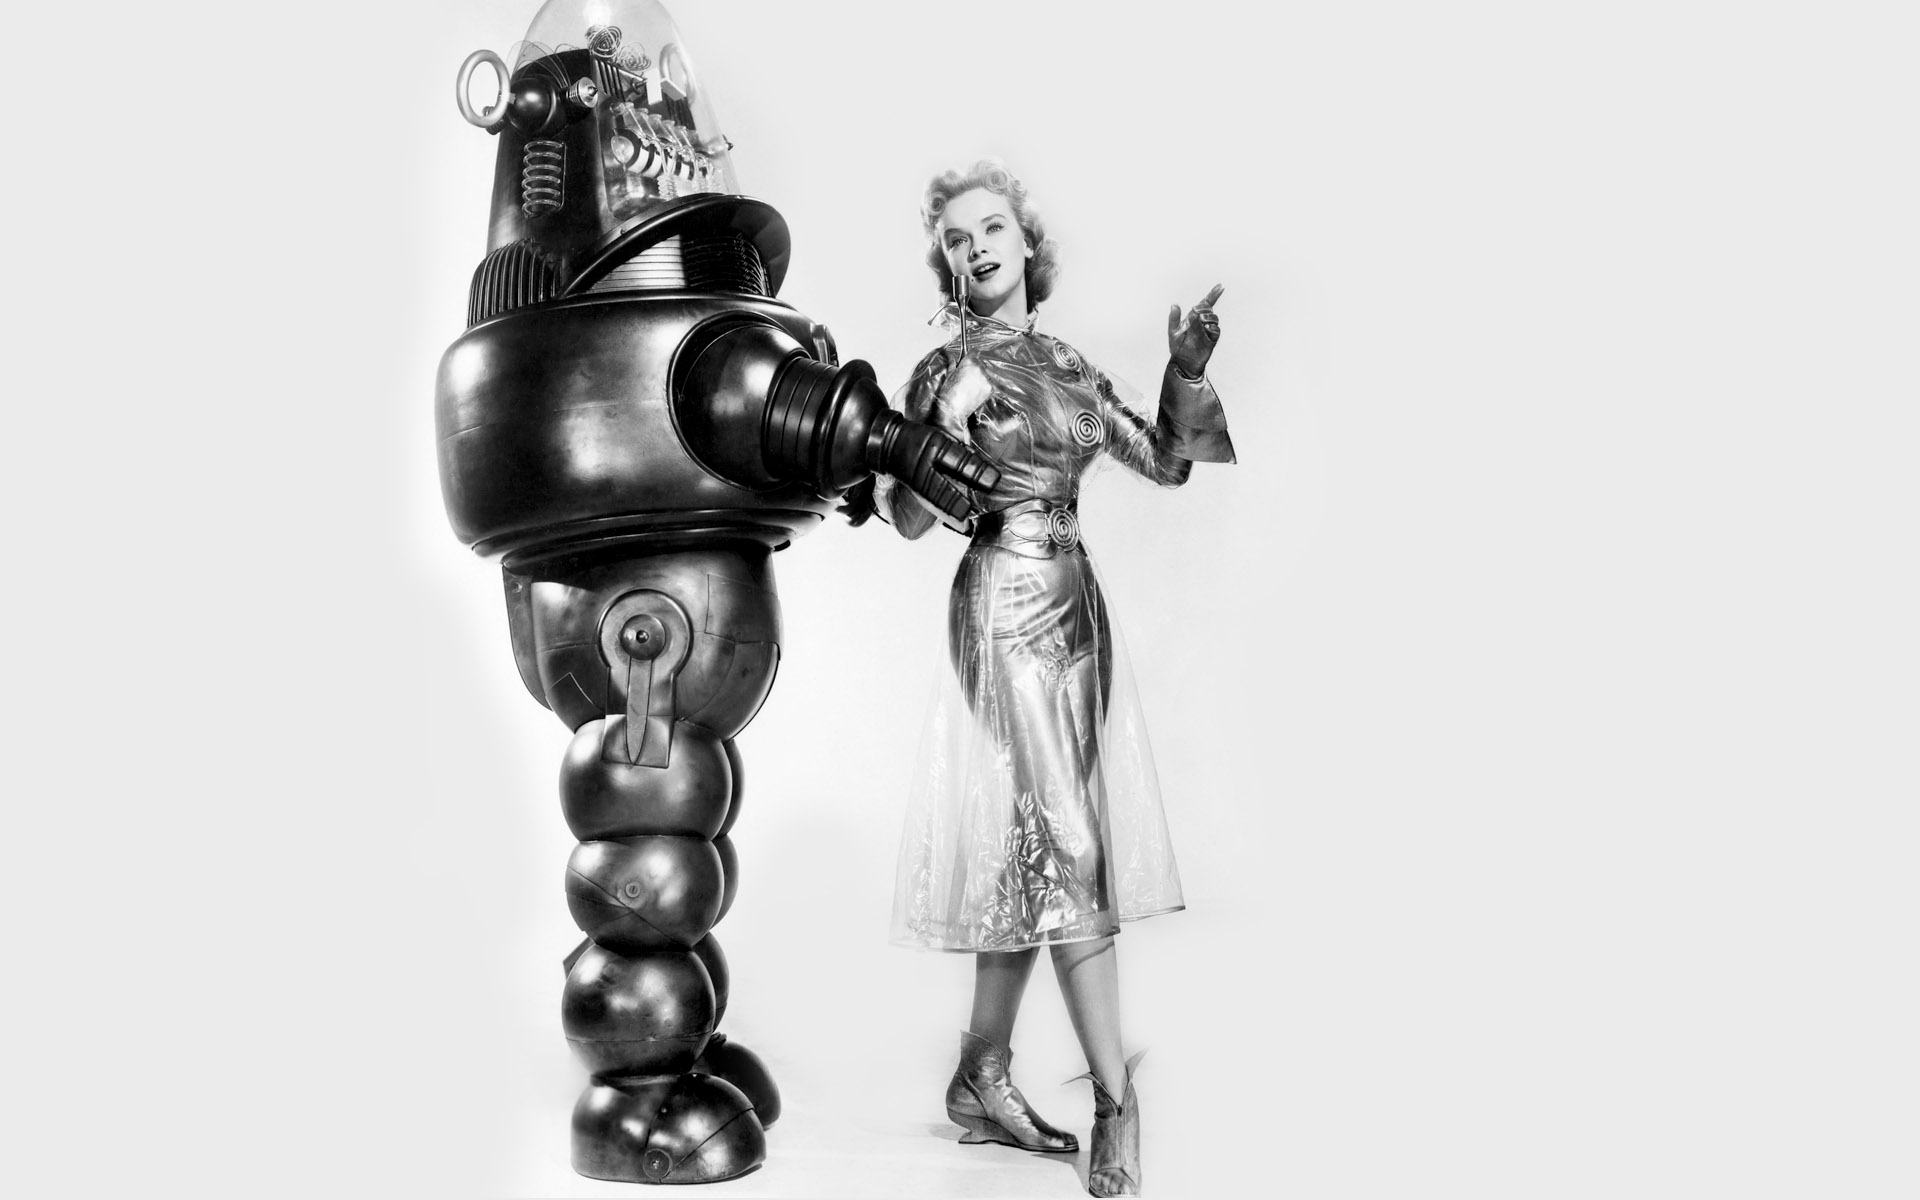 робот, научная фантастика, Запретная планета, Энн Фрэнсис - обои на рабочий стол